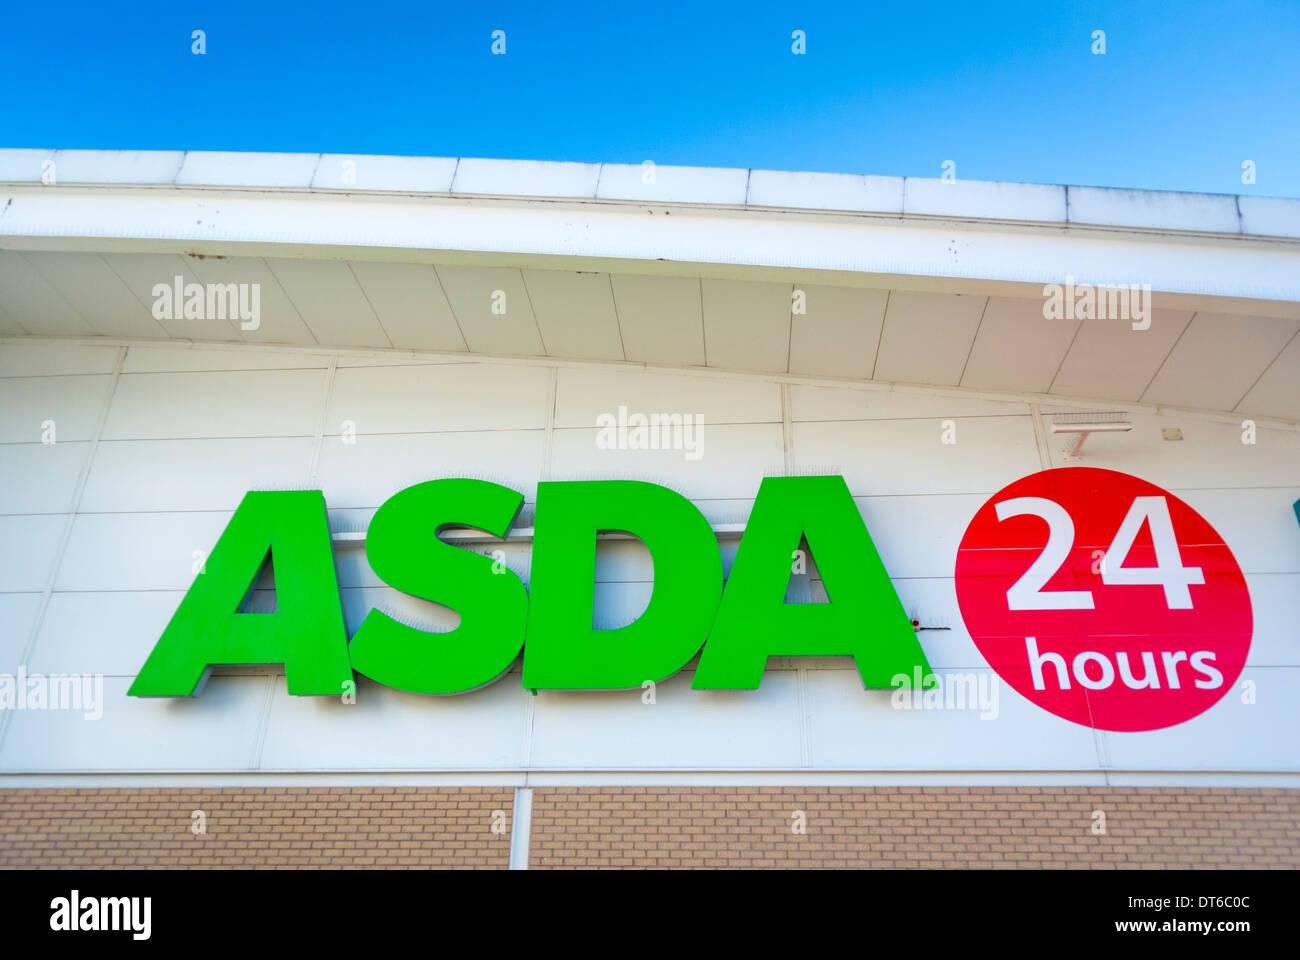 ASDA supermarket 24 hours sign Stock Photo